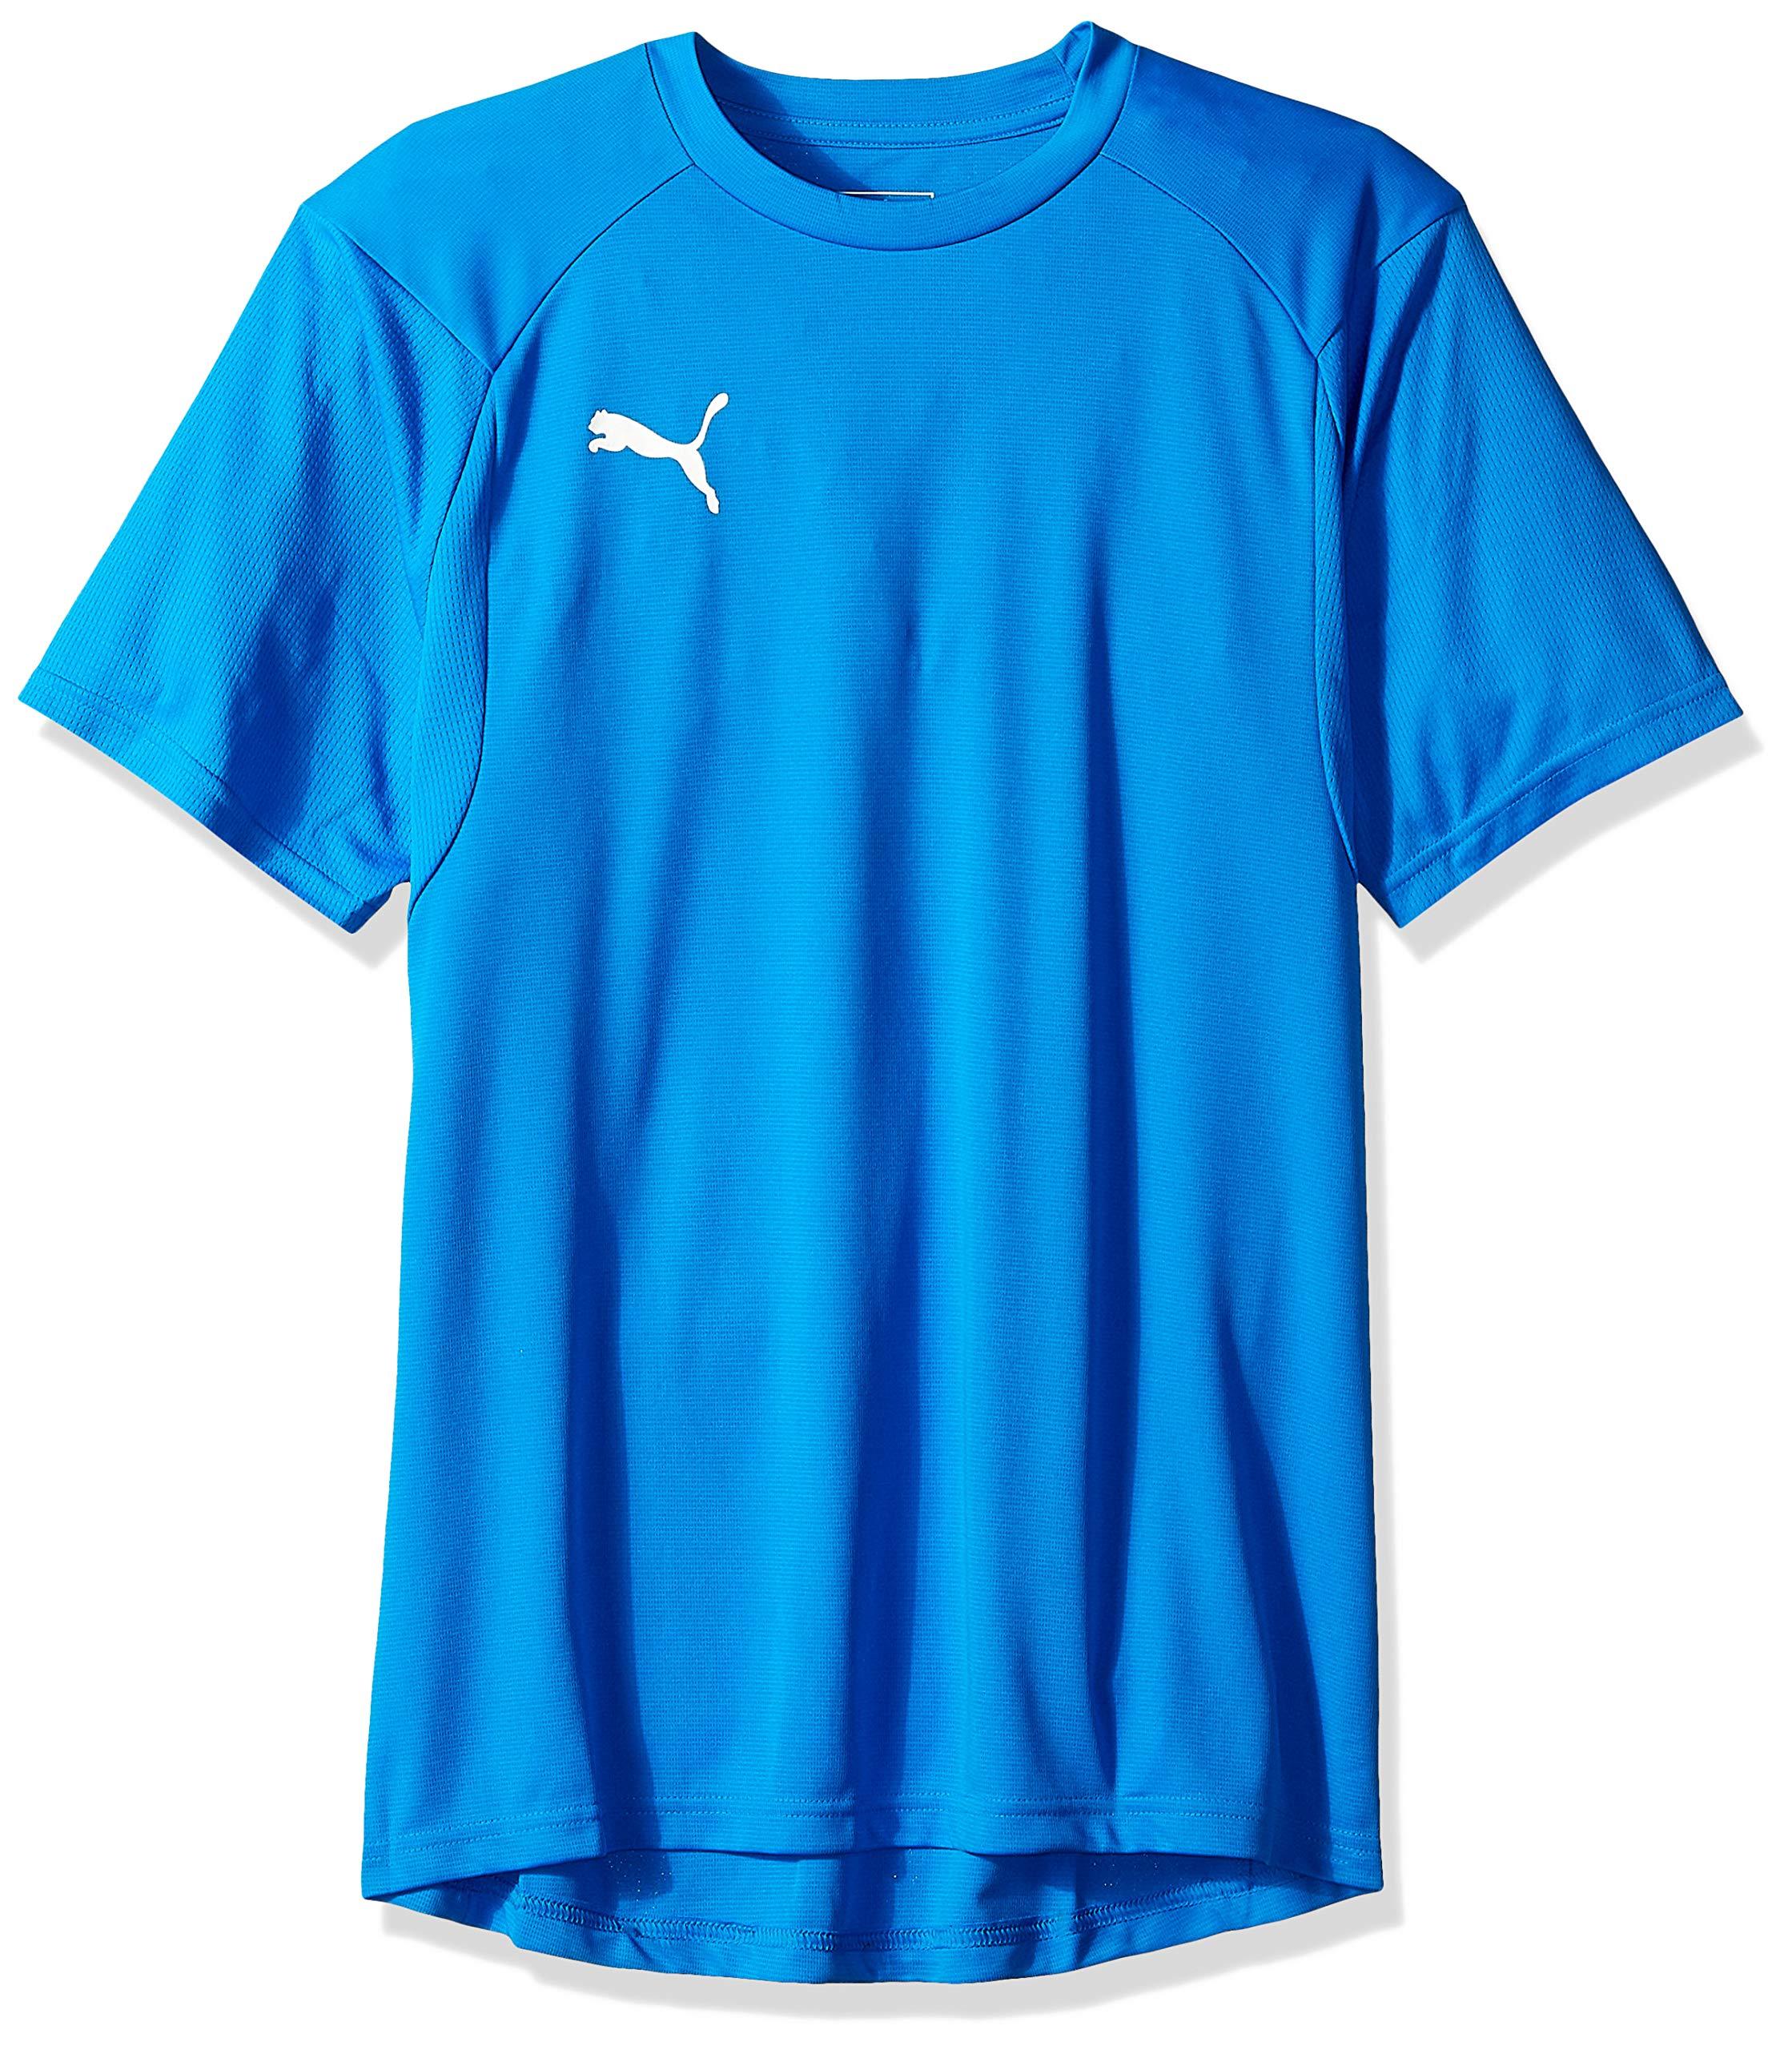 PUMA Liga Training Jersey in Blue for Men - Save 38% - Lyst